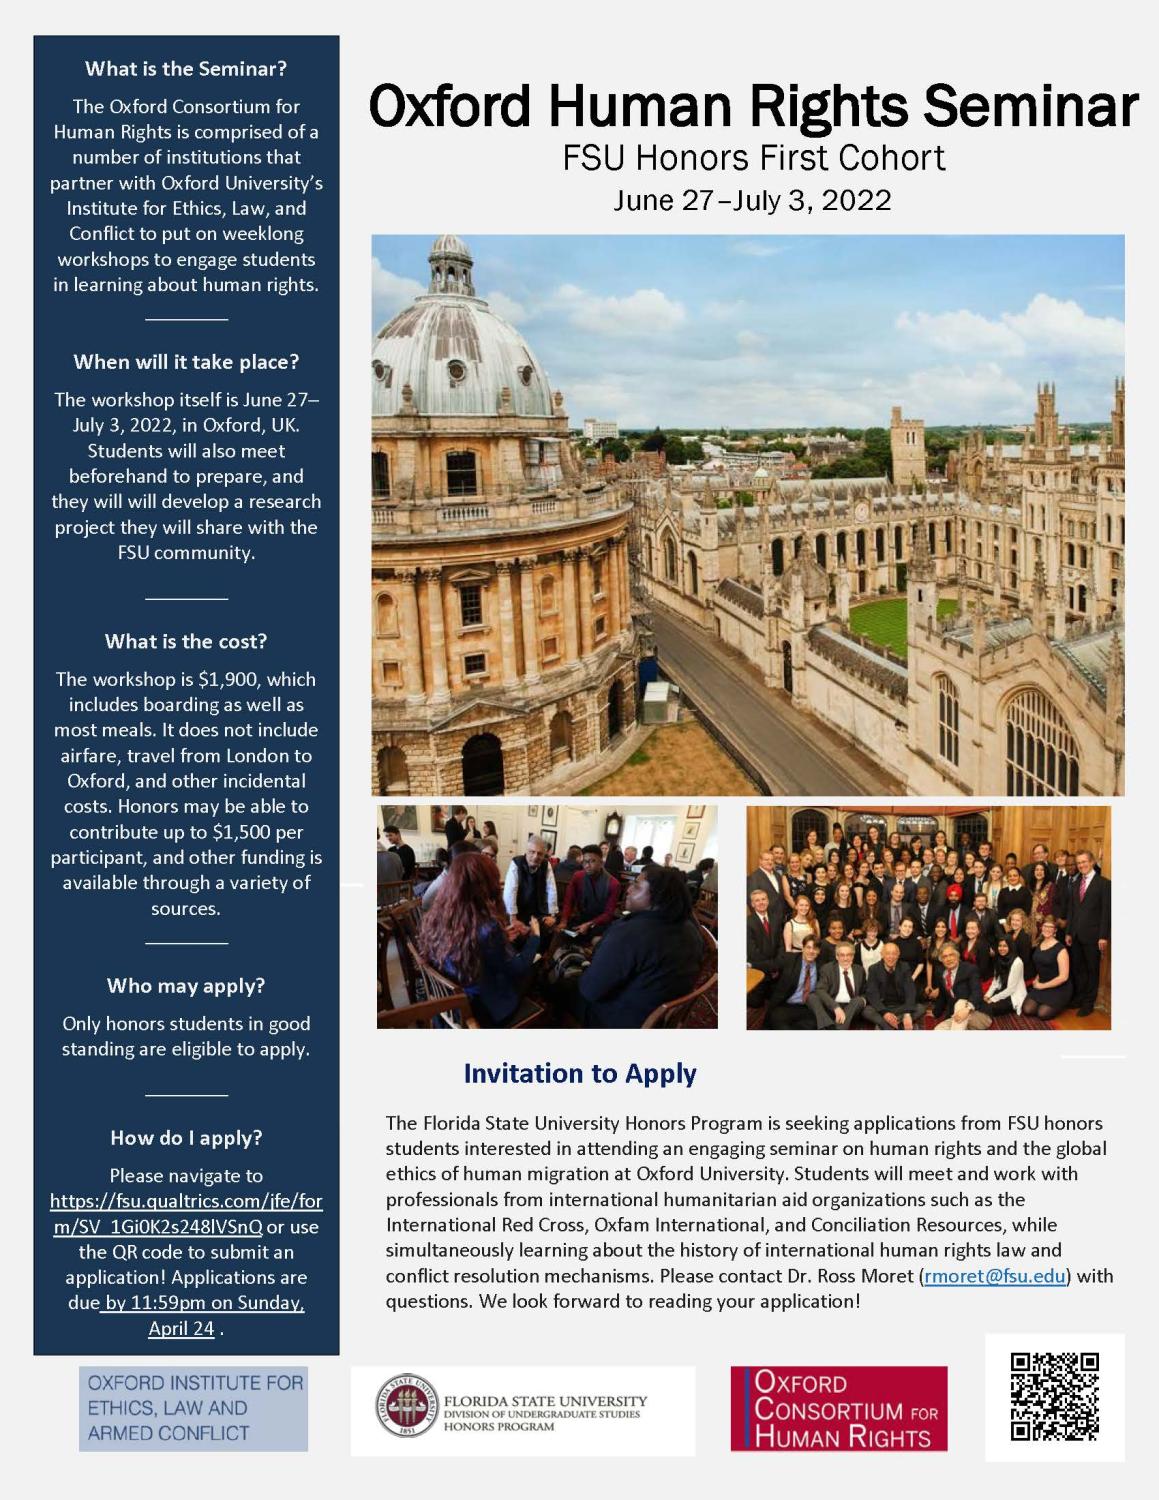 Oxford Human Rights Seminar Flyer